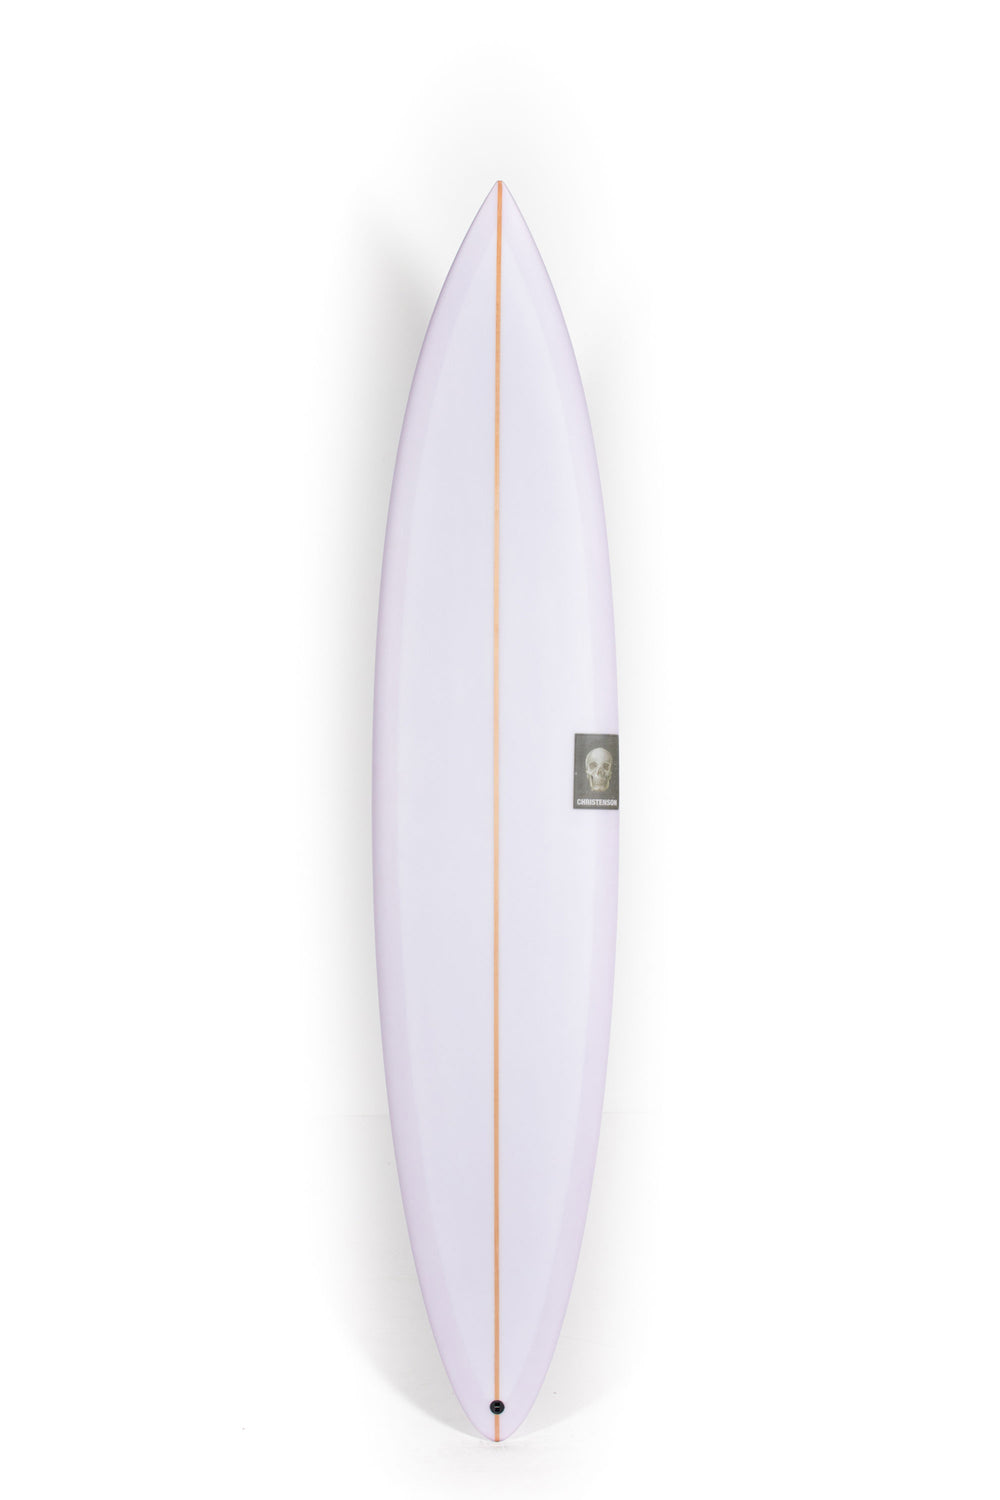 Pukas-Surf-Shop-Christenson-Surfboards-Carrera-Chris-Christenson-8_0